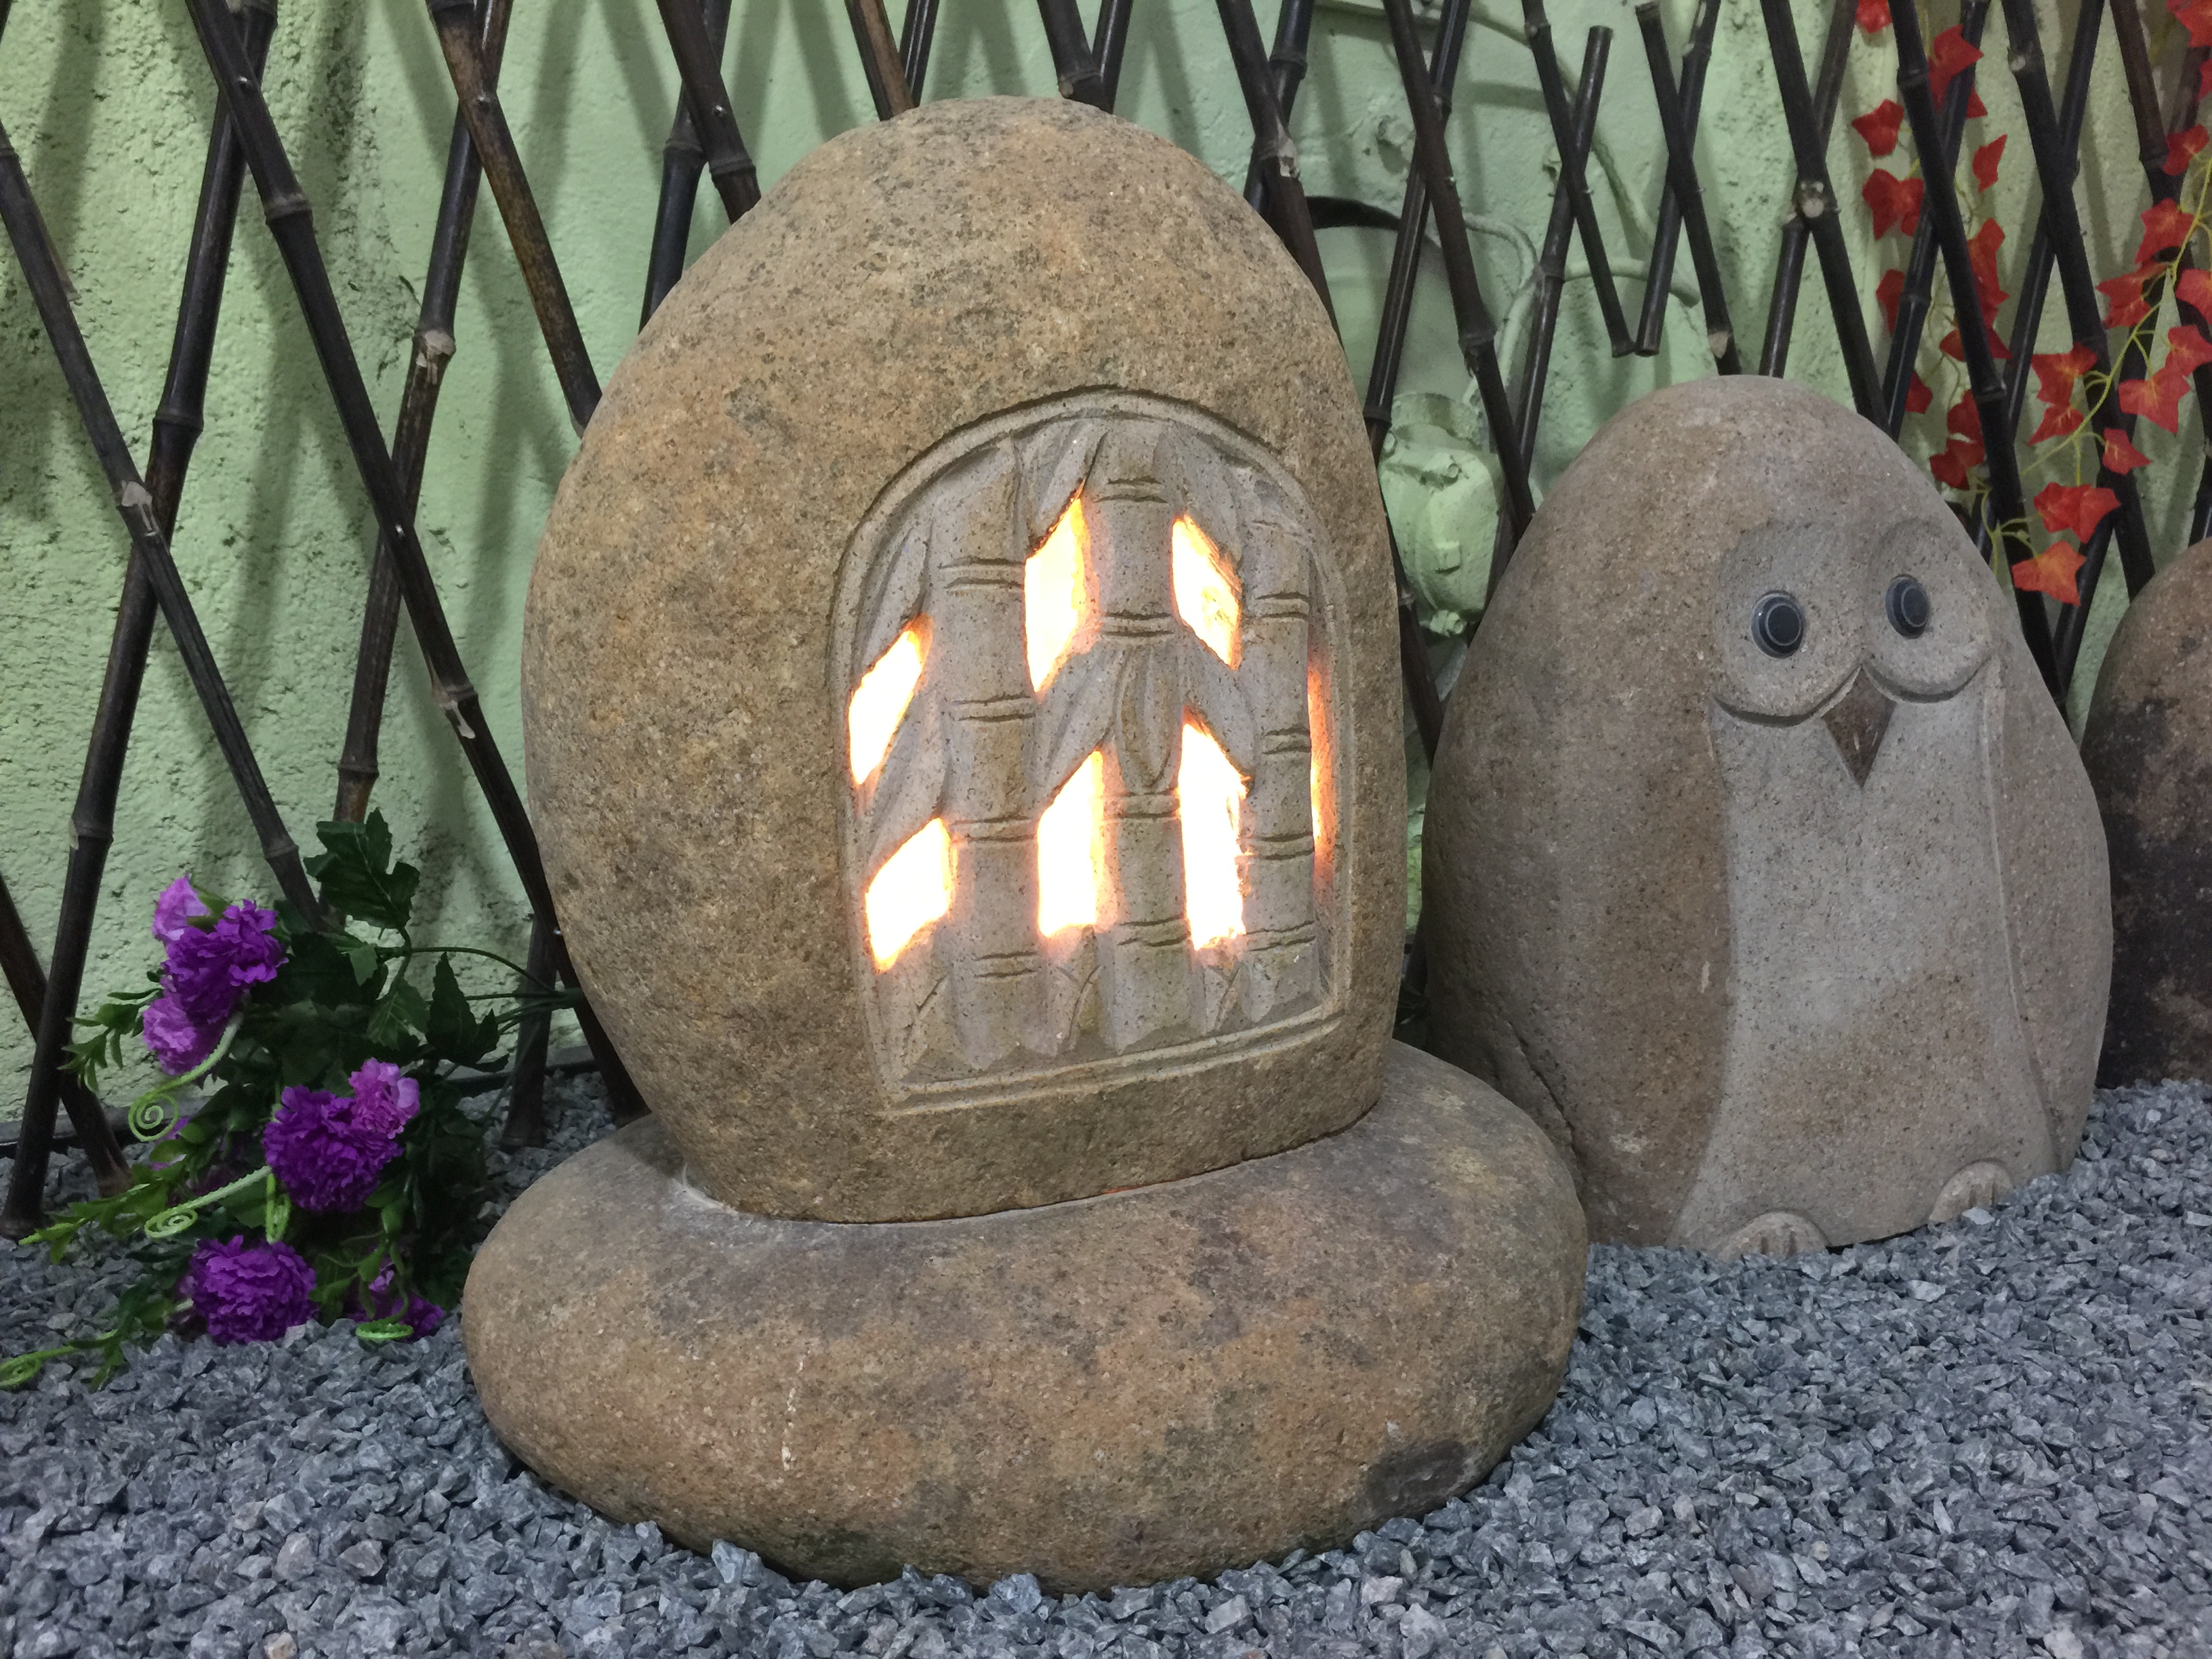 Natural stone lantern for landscape decor